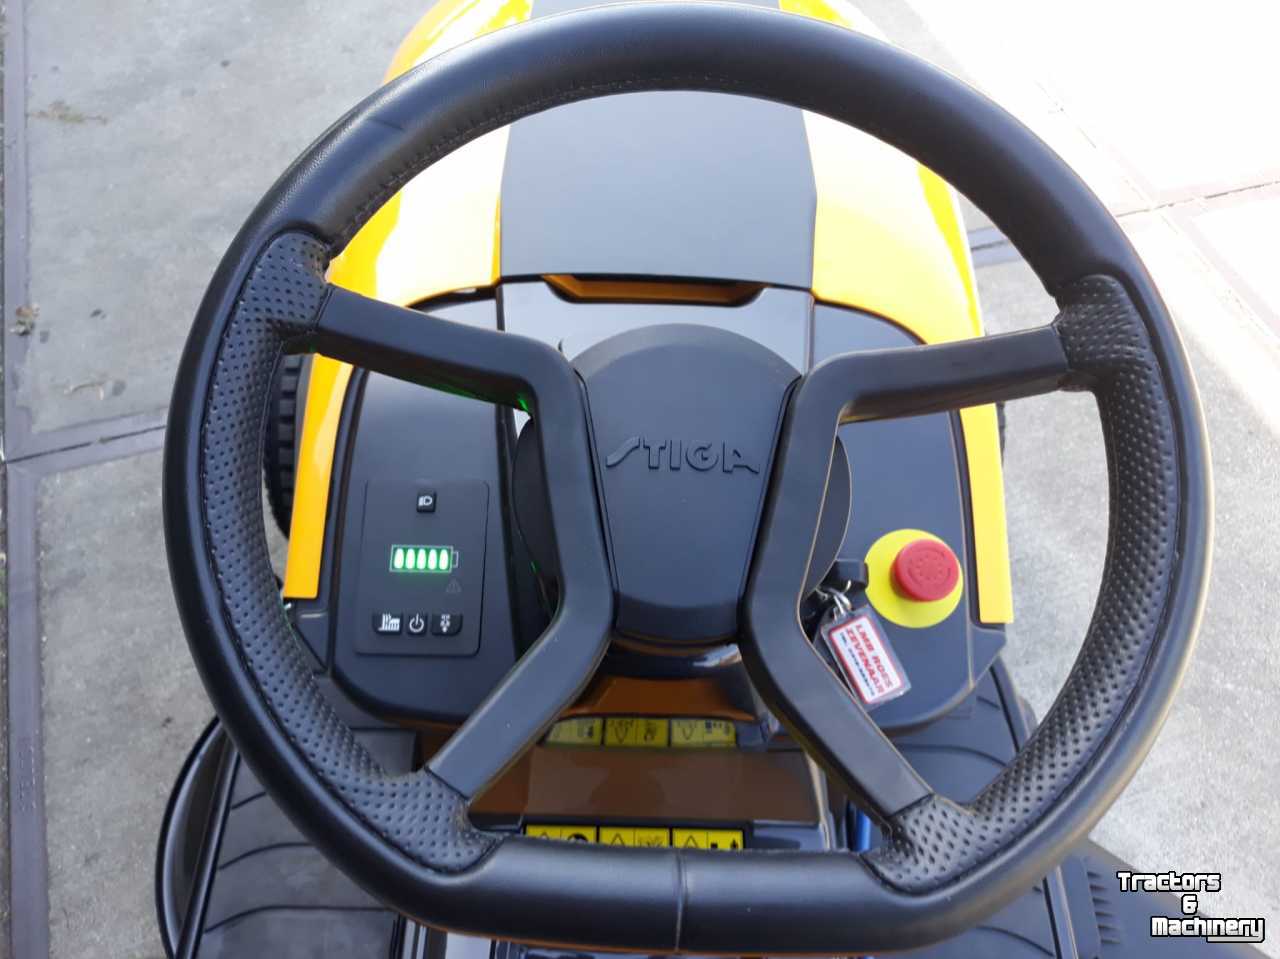 Mower self-propelled Stiga E-ride S300 accu gazonmaaier - zitmaaier